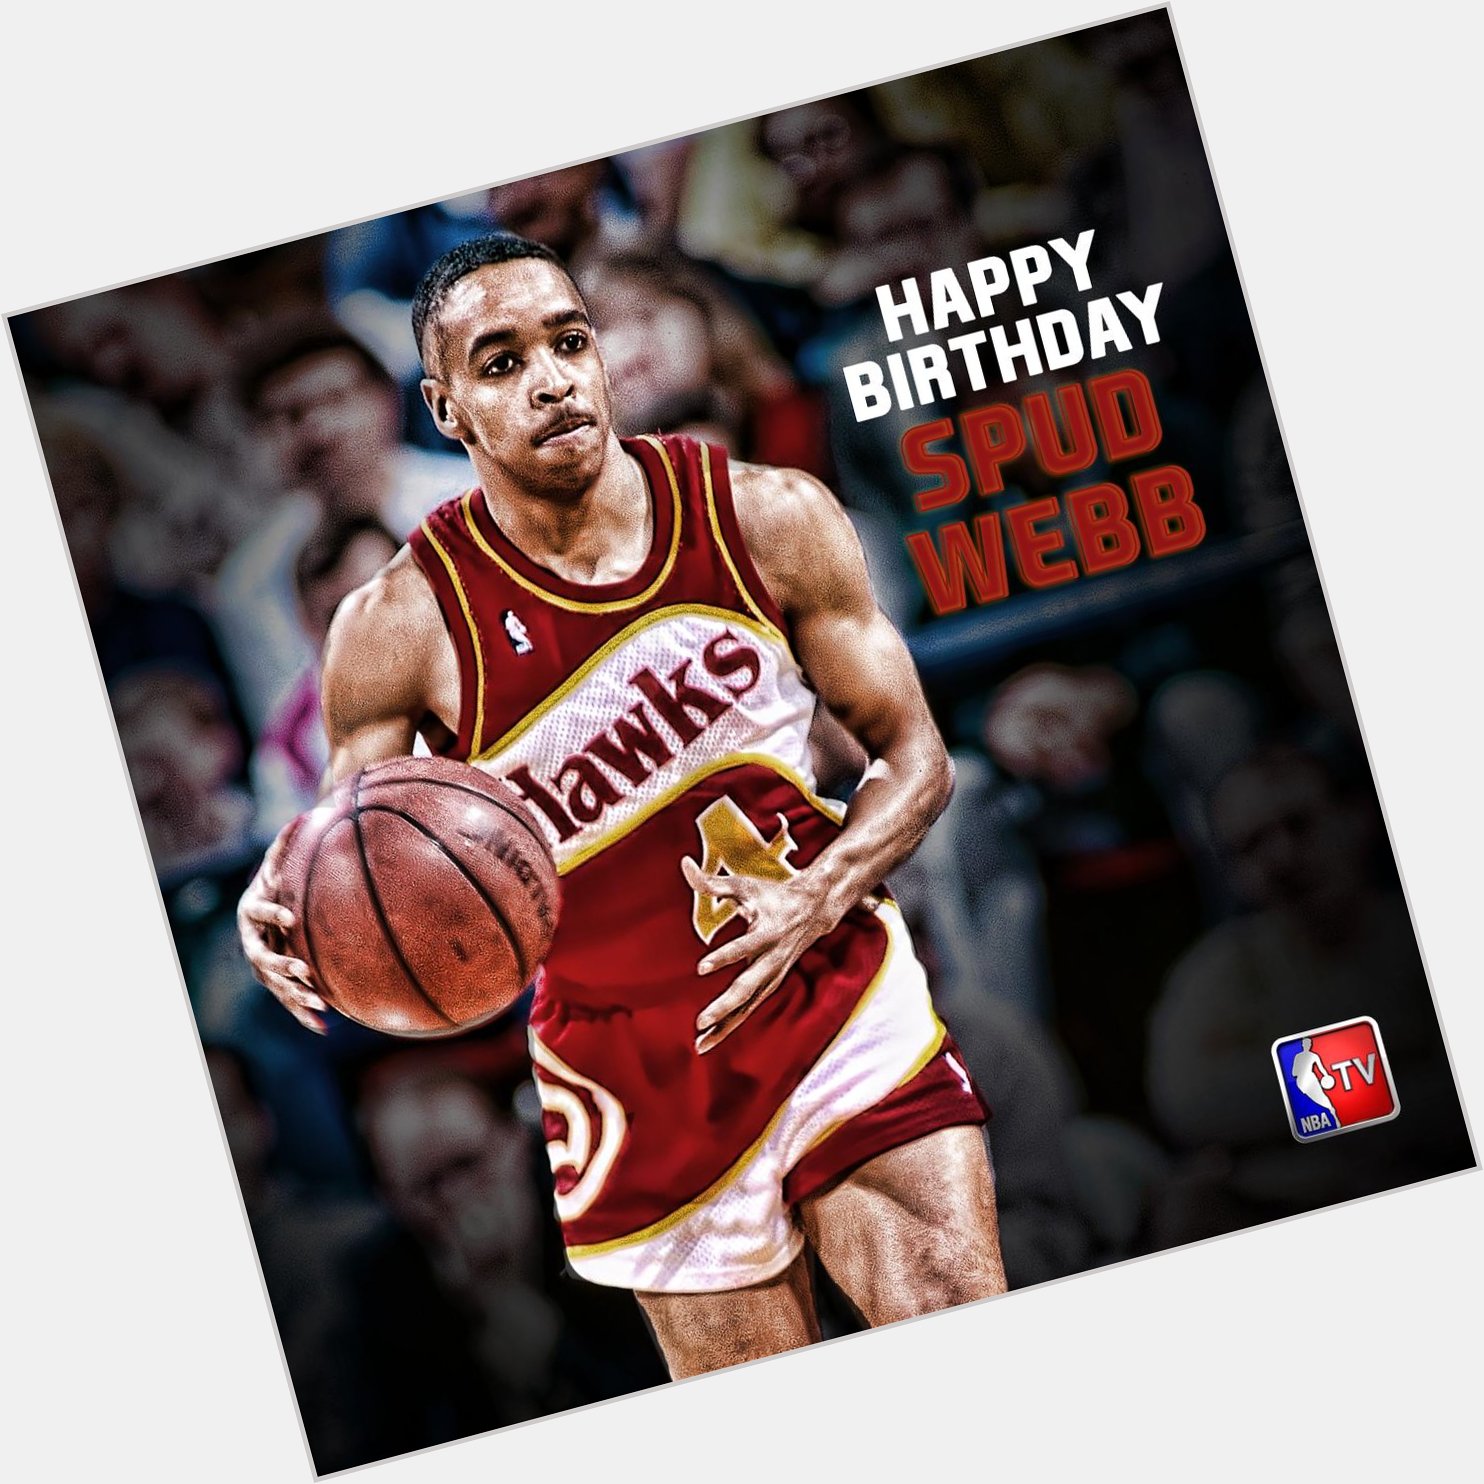 Join us in wishing Spud Webb a Happy Birthday! 